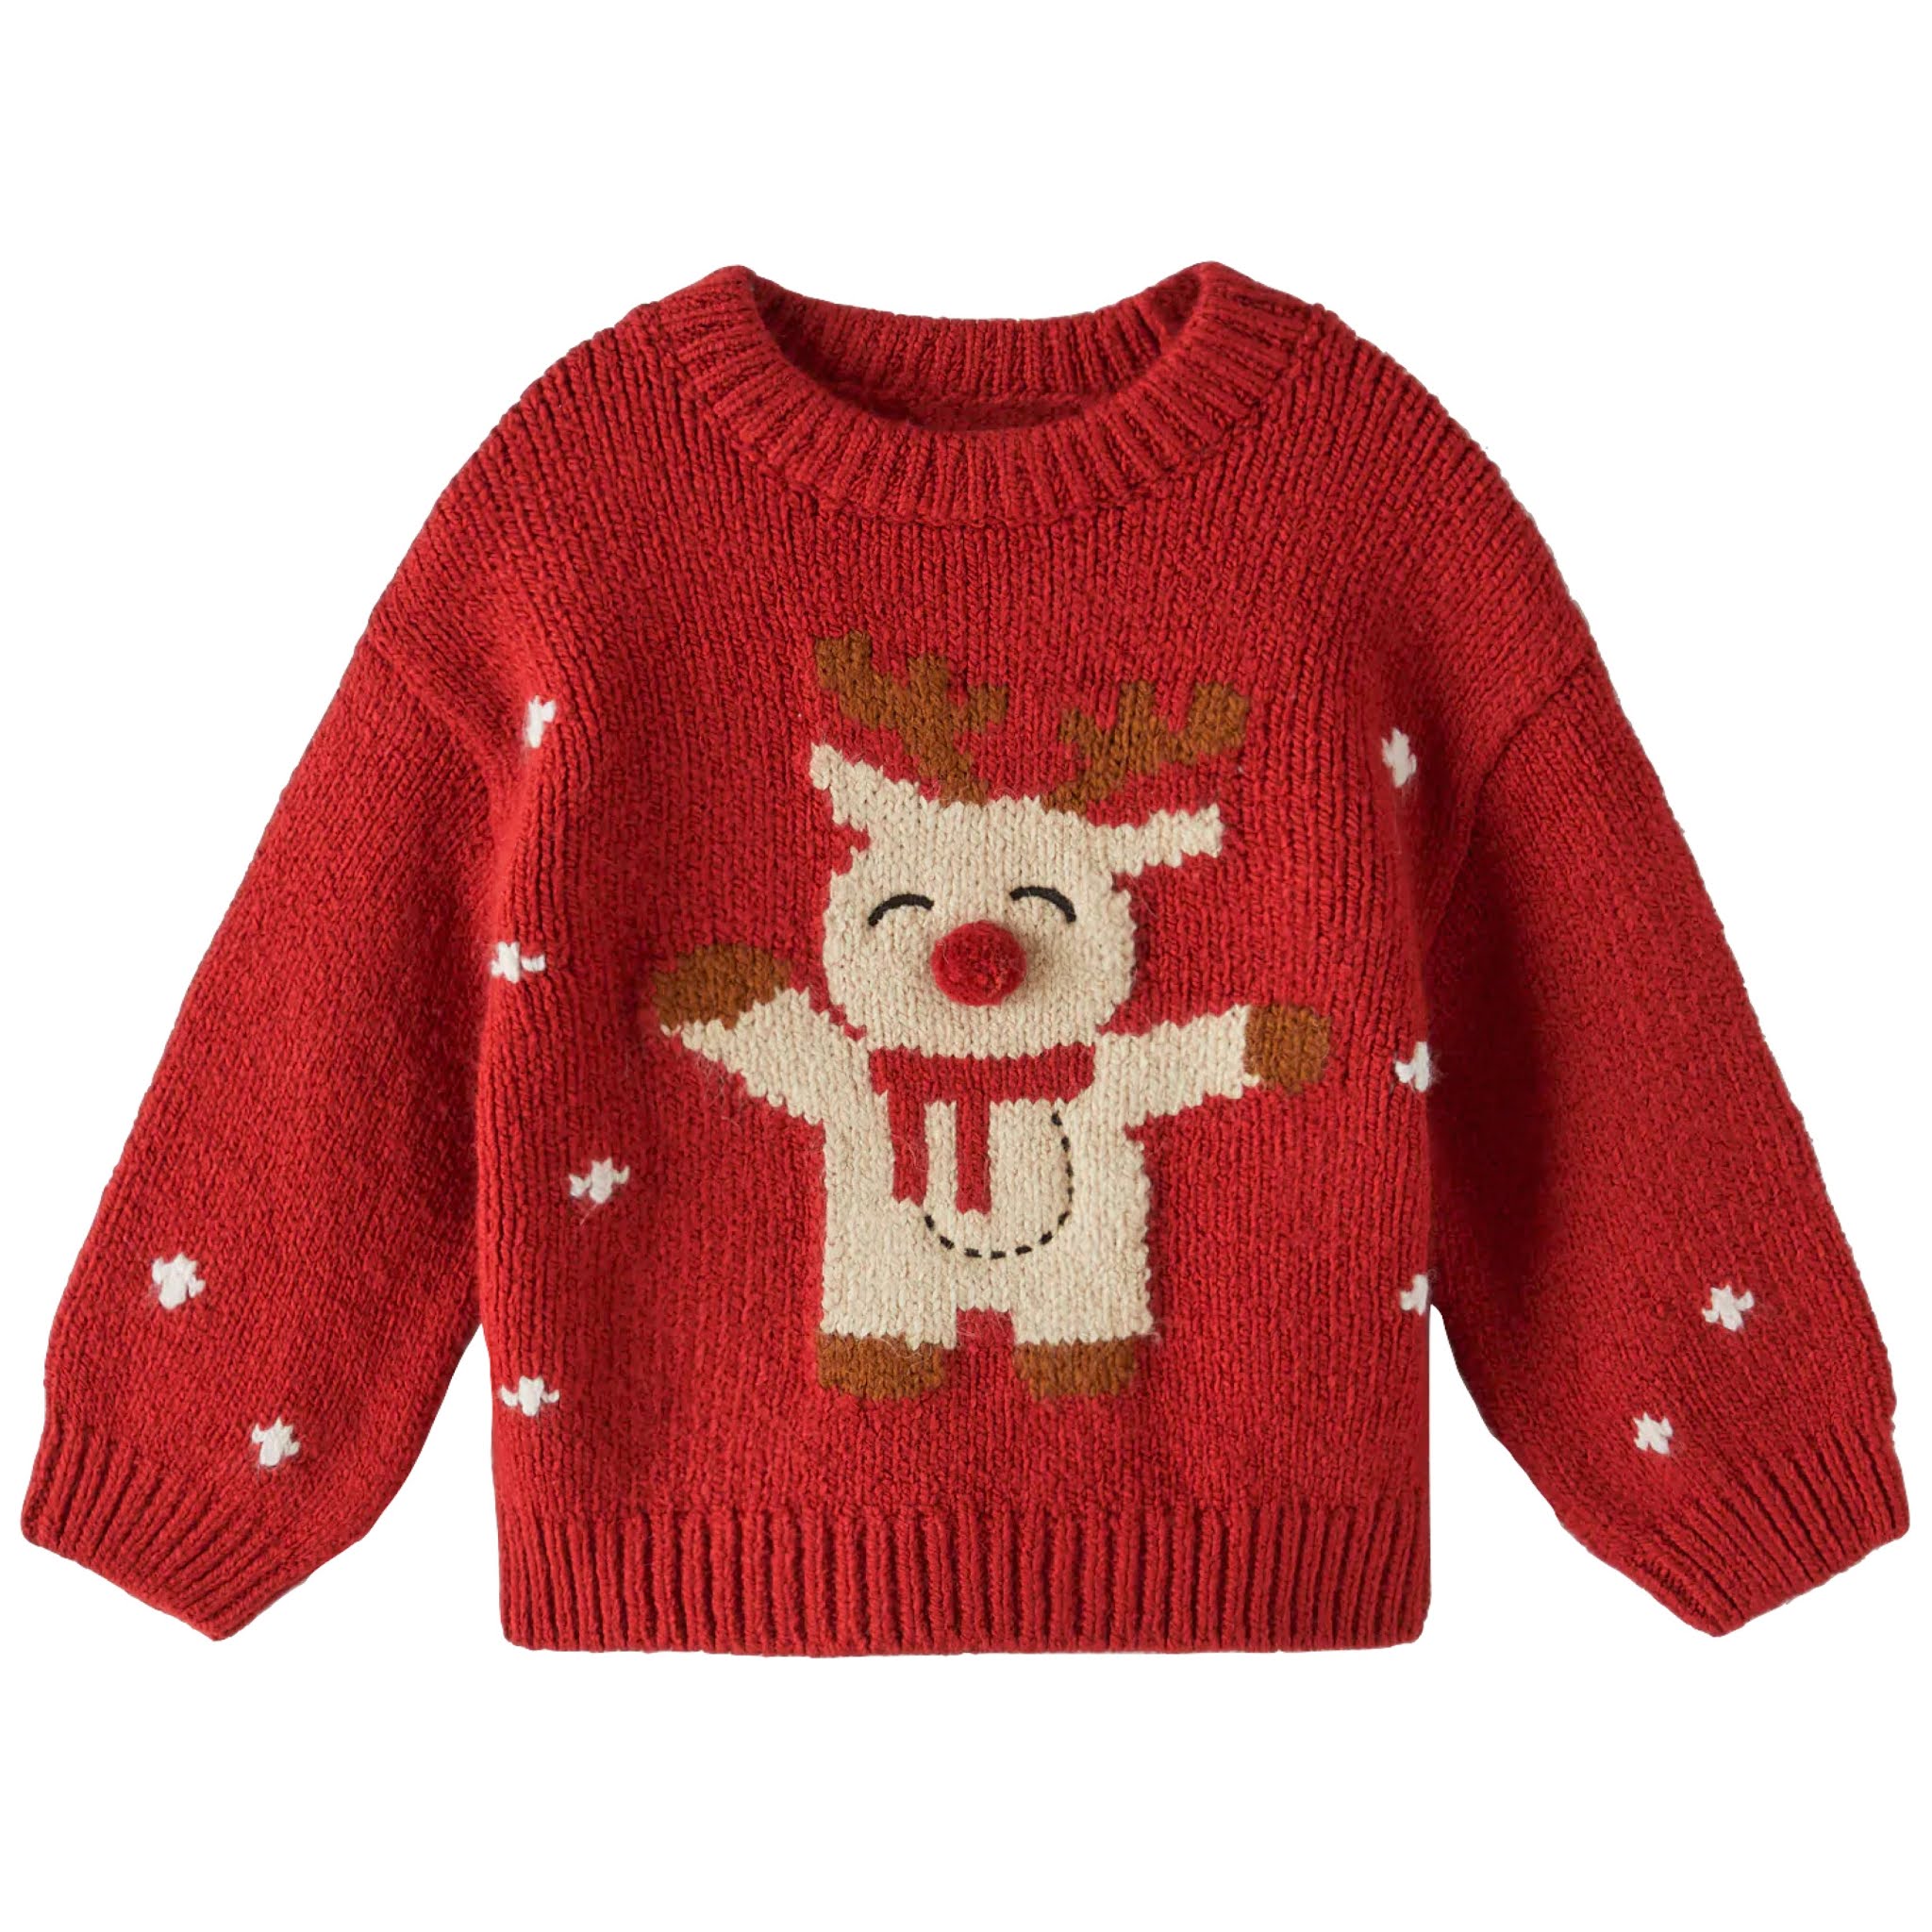 Toddler Reindeer Knit Sweater from Zara Kids